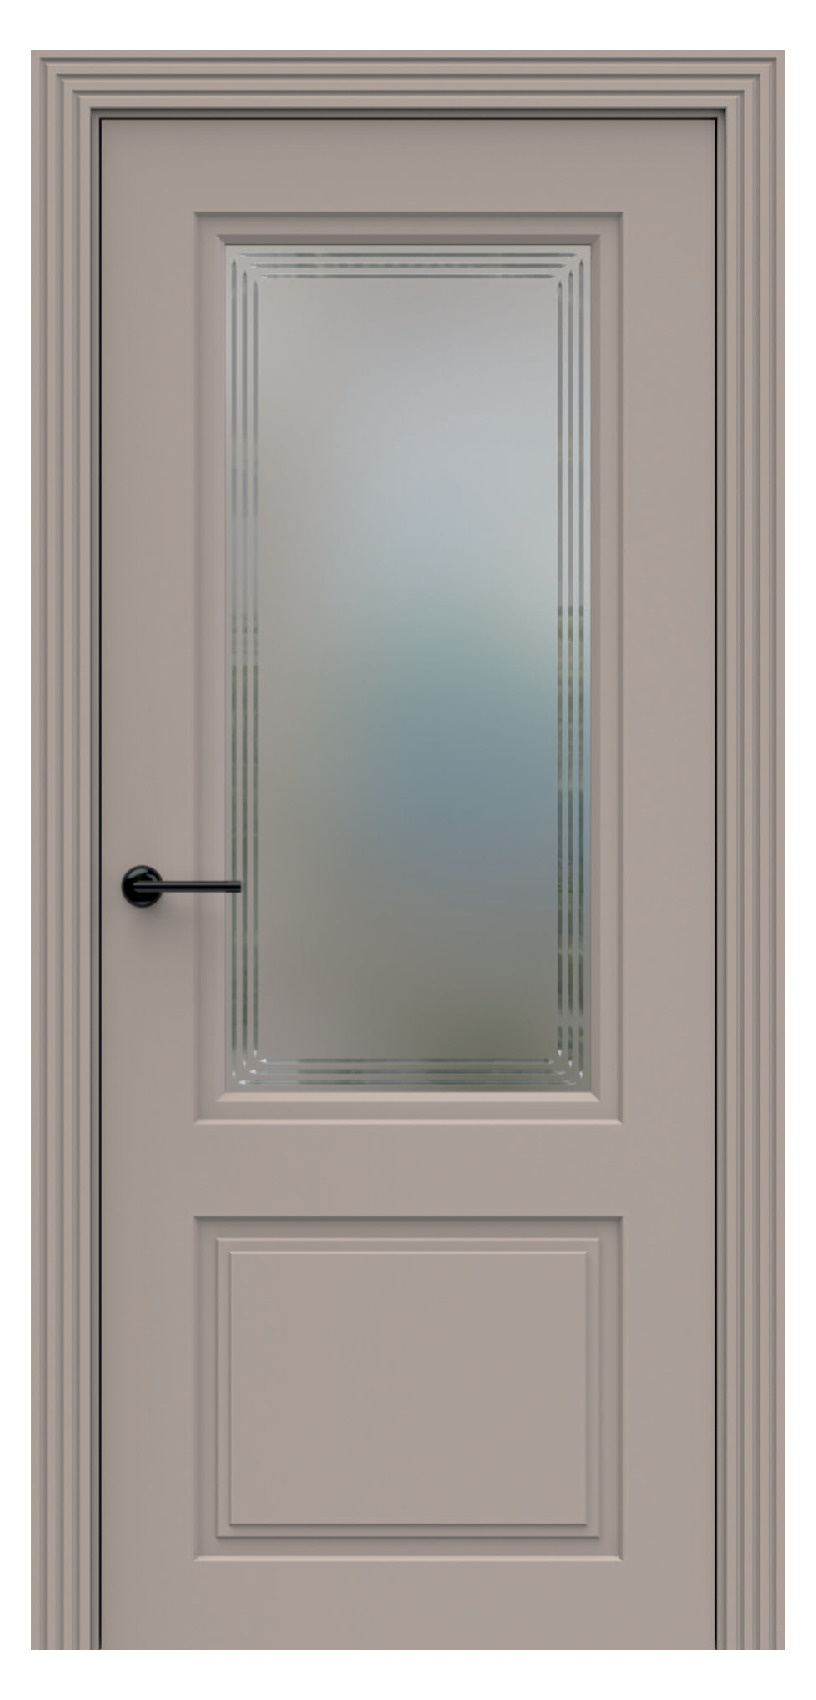 Questdoors Межкомнатная дверь QI2, арт. 17963 - фото №1